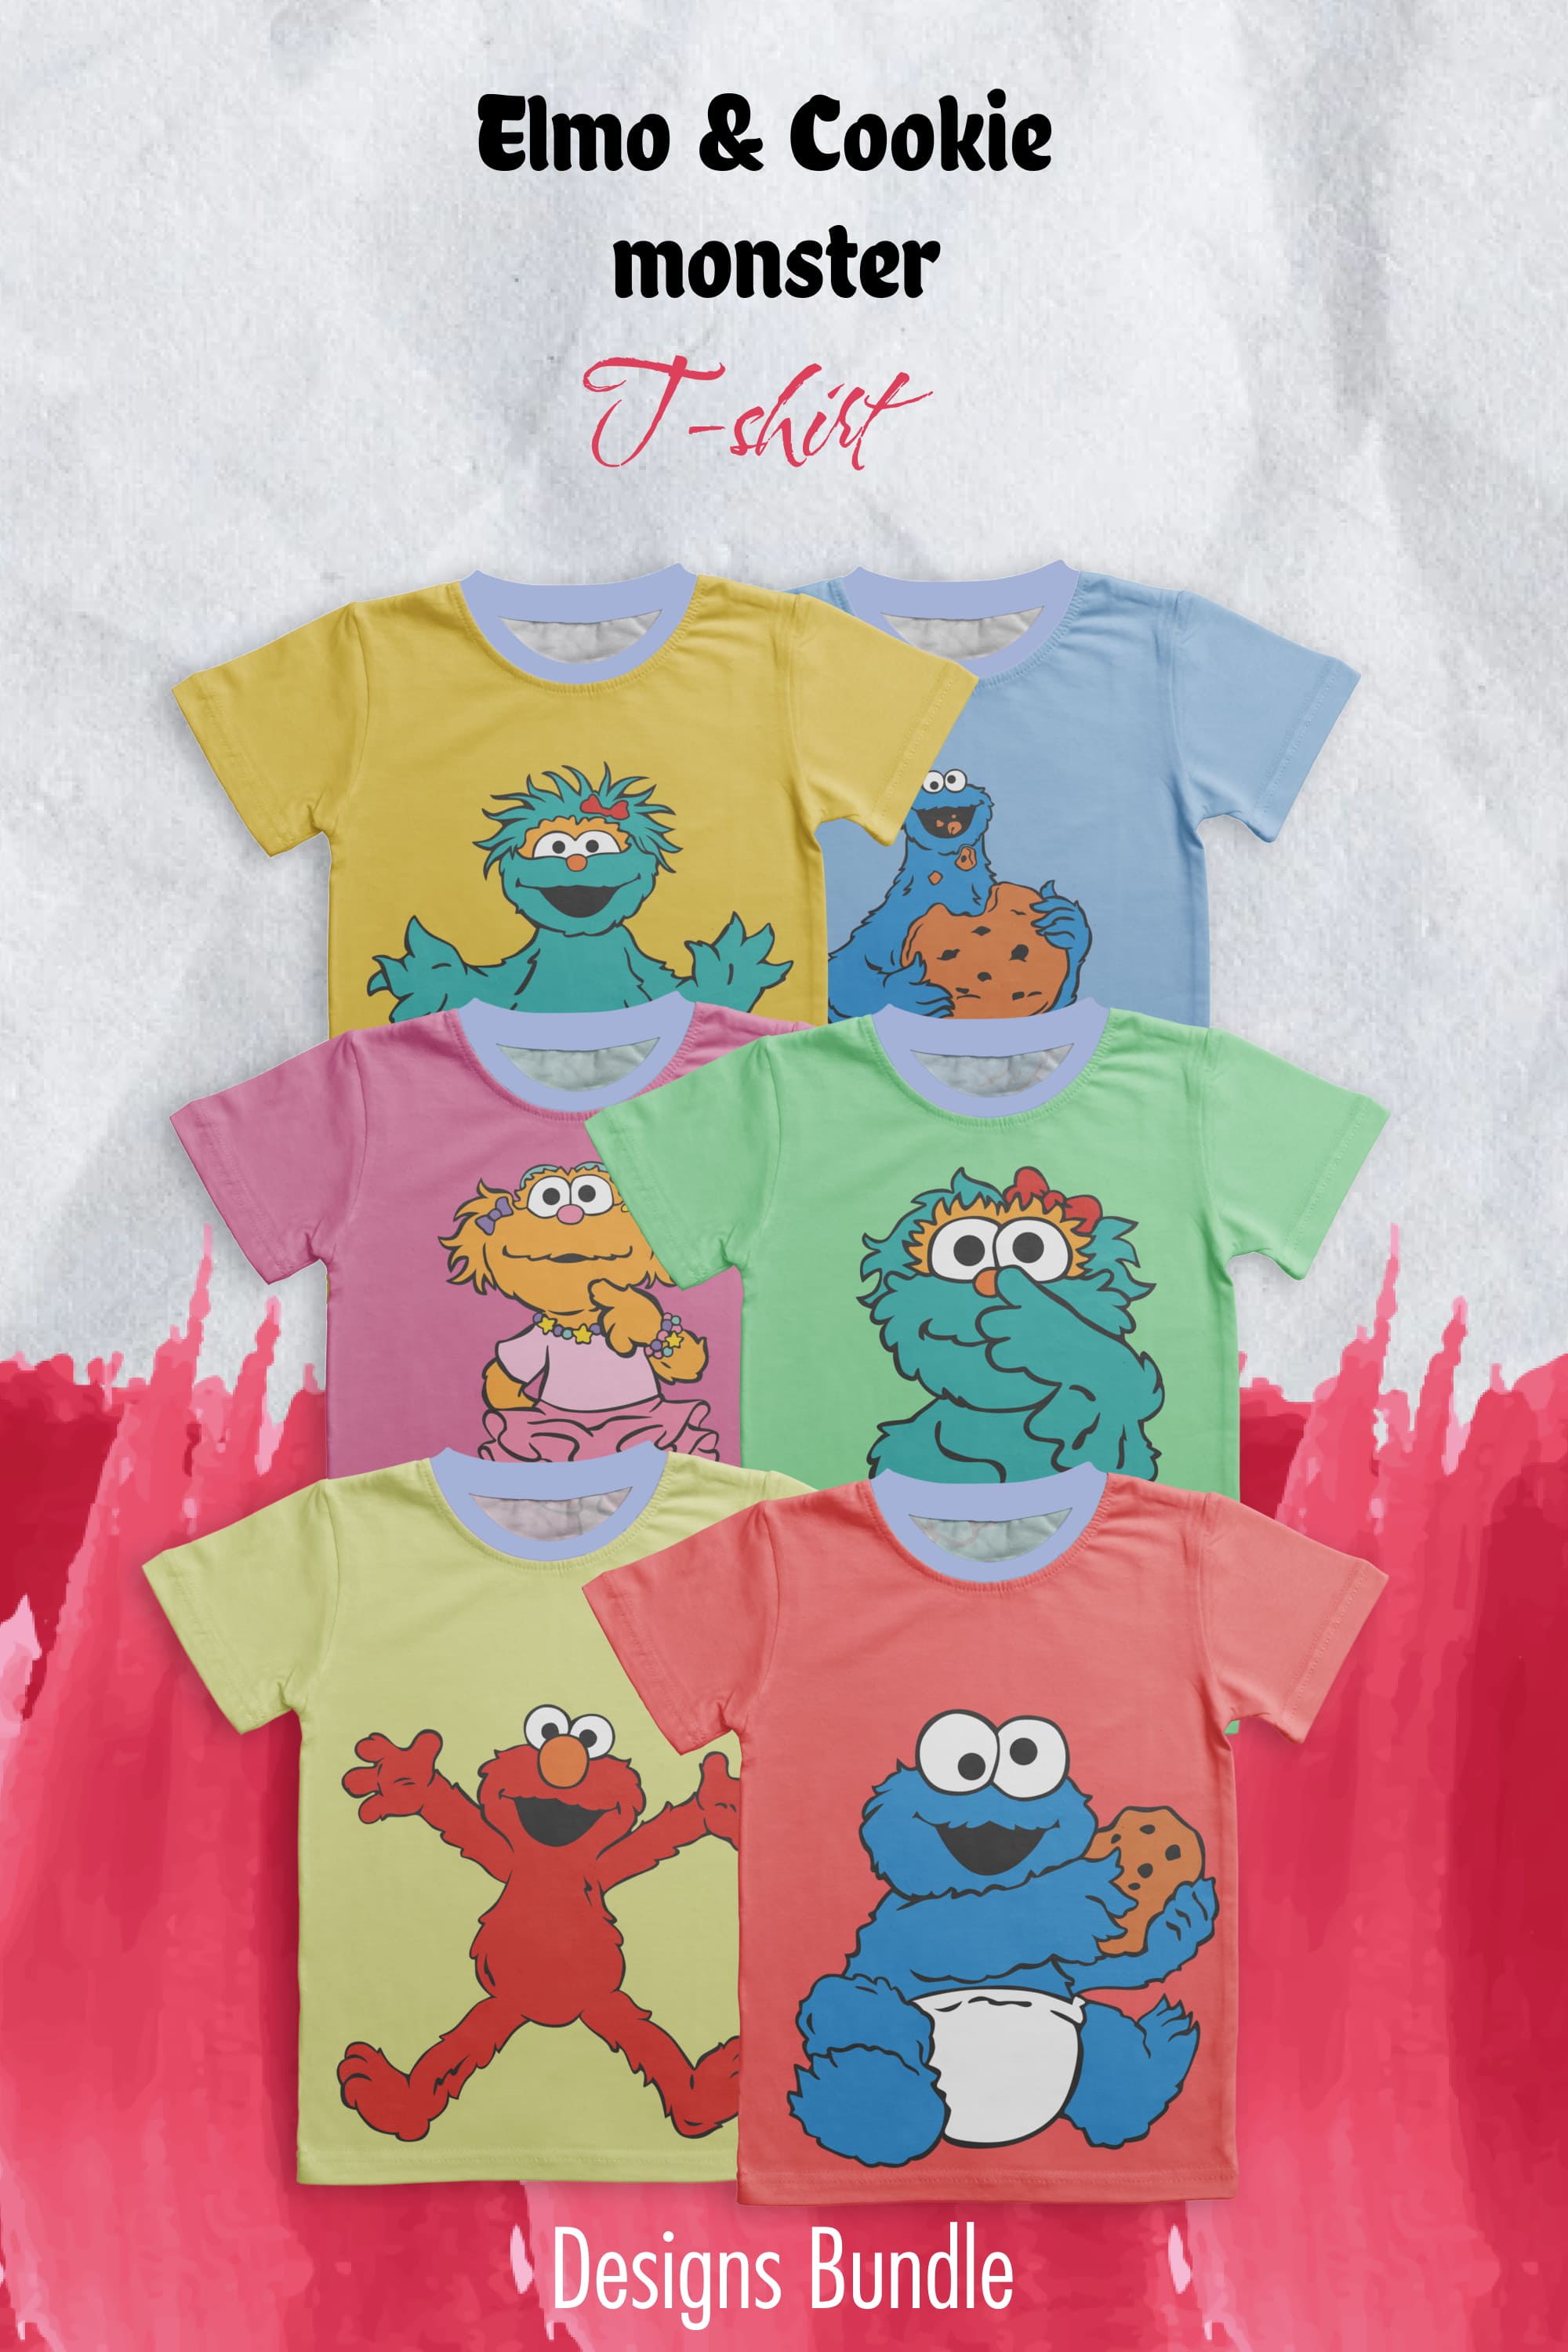 Elmo And Cookie Monster T-shirt Designs Bundle - Pinterest.